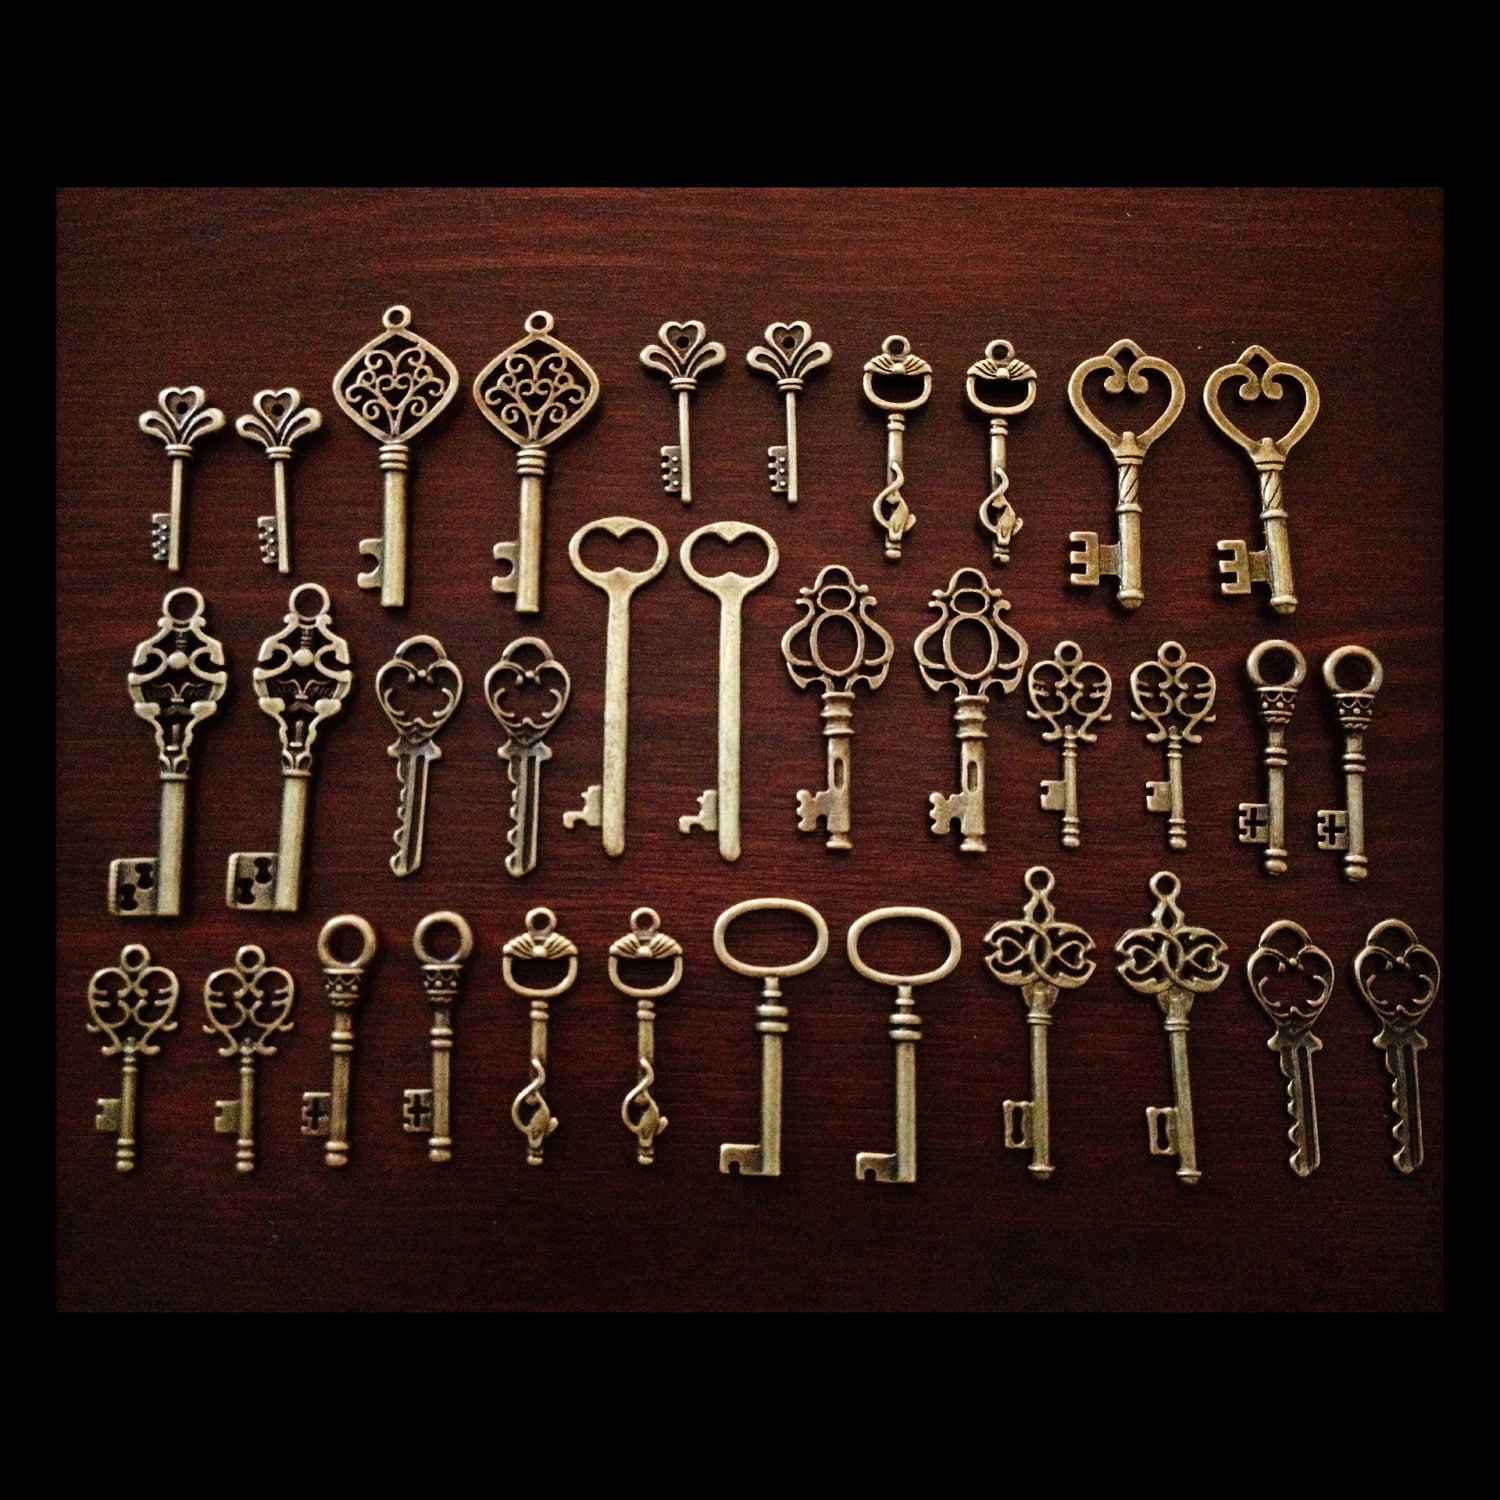 Keys to the Kingdom - Skeleton Keys - 75 x Vintage Keys Antique Bronze Brass Skeleton Keys Old Skeleton Set